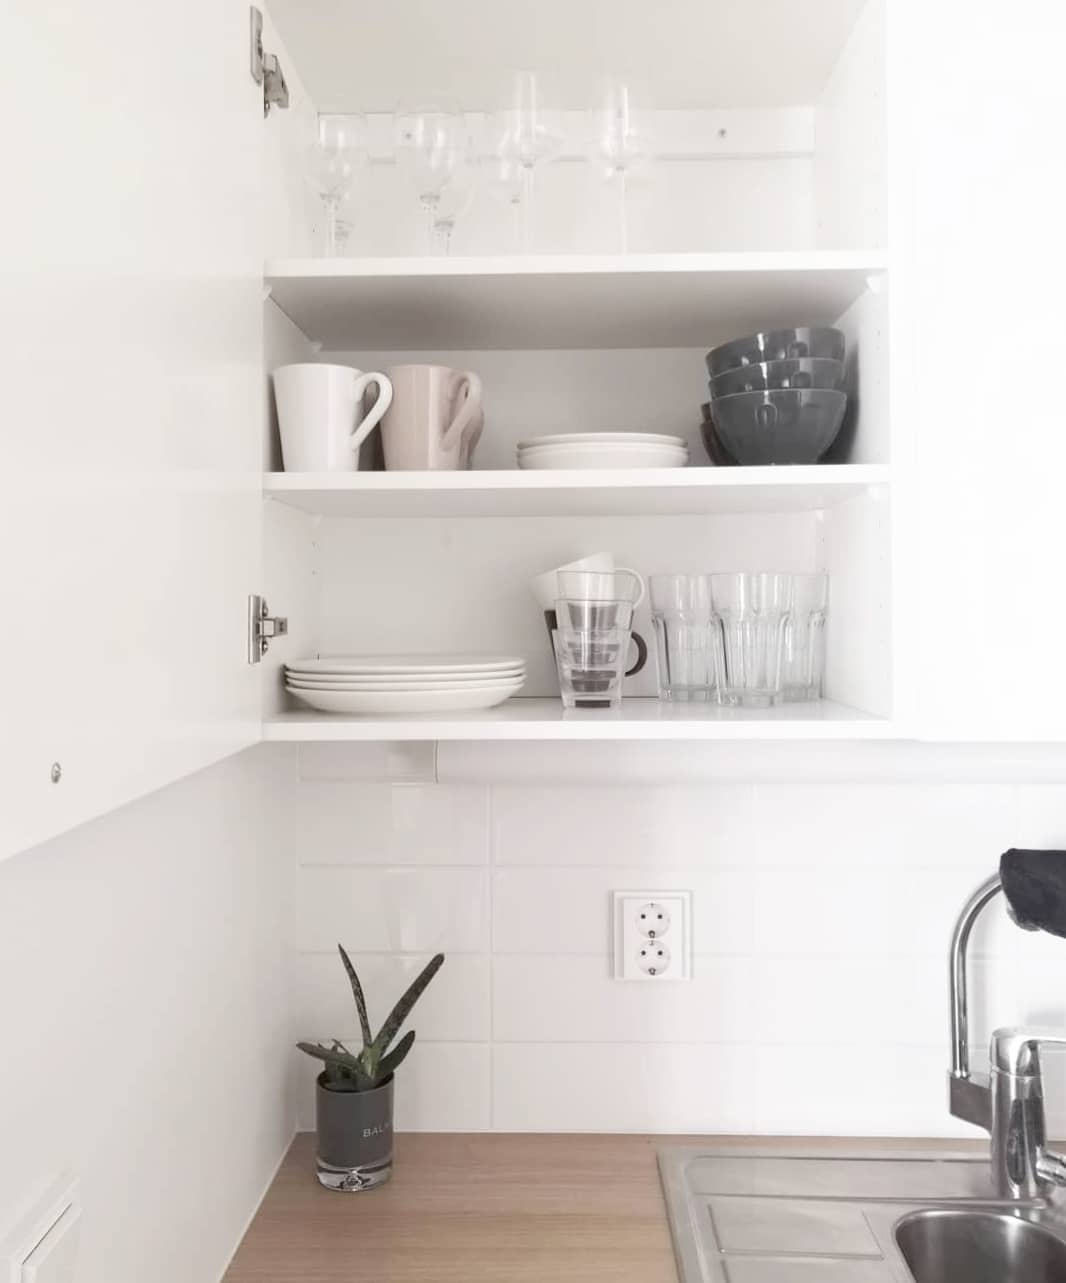 https://www.extraspace.com/blog/wp-content/uploads/2020/01/decluttering-minimalist-kitchen.jpg